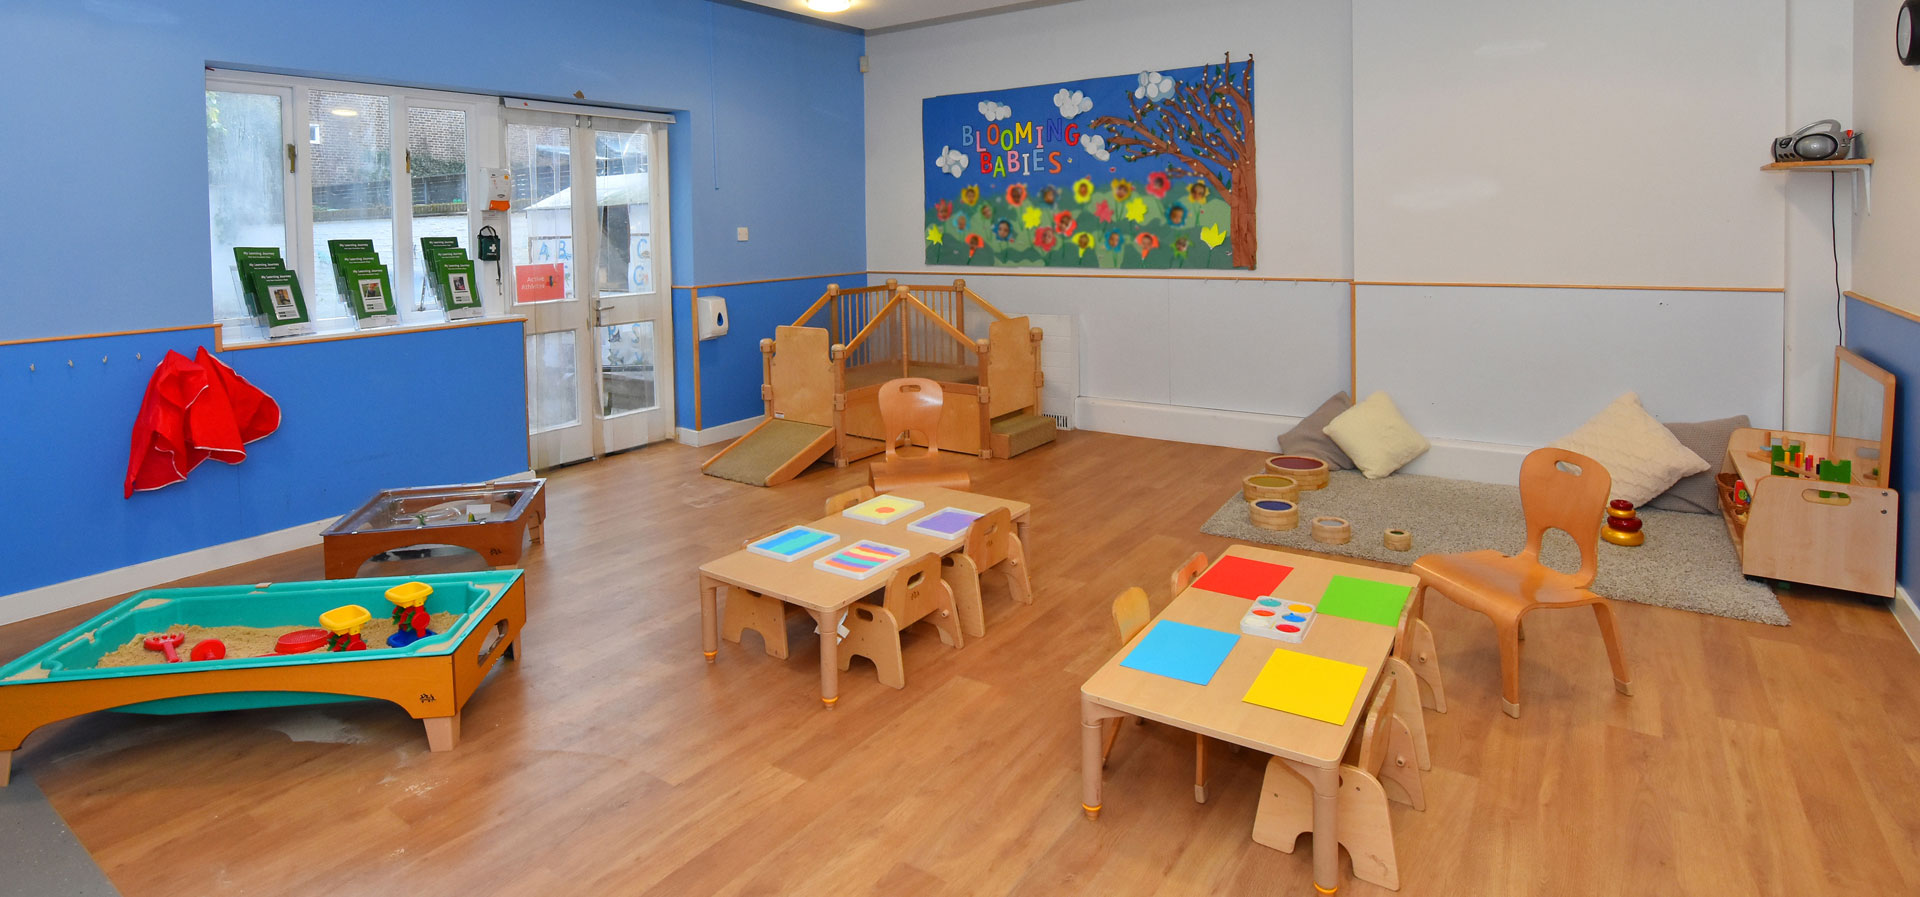 Bright Horizons Holland Park Day Nursery and Preschool